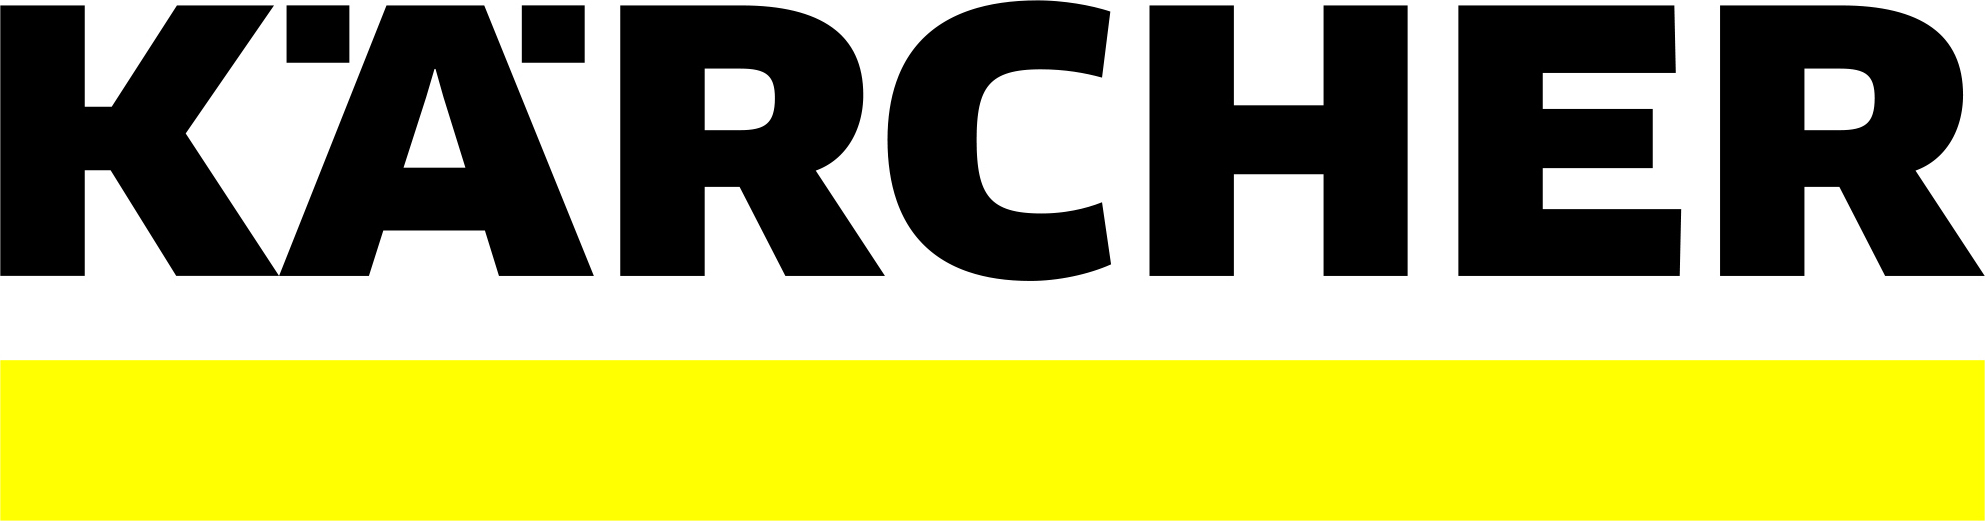 Kaercher Logo Claim CO rgb neu